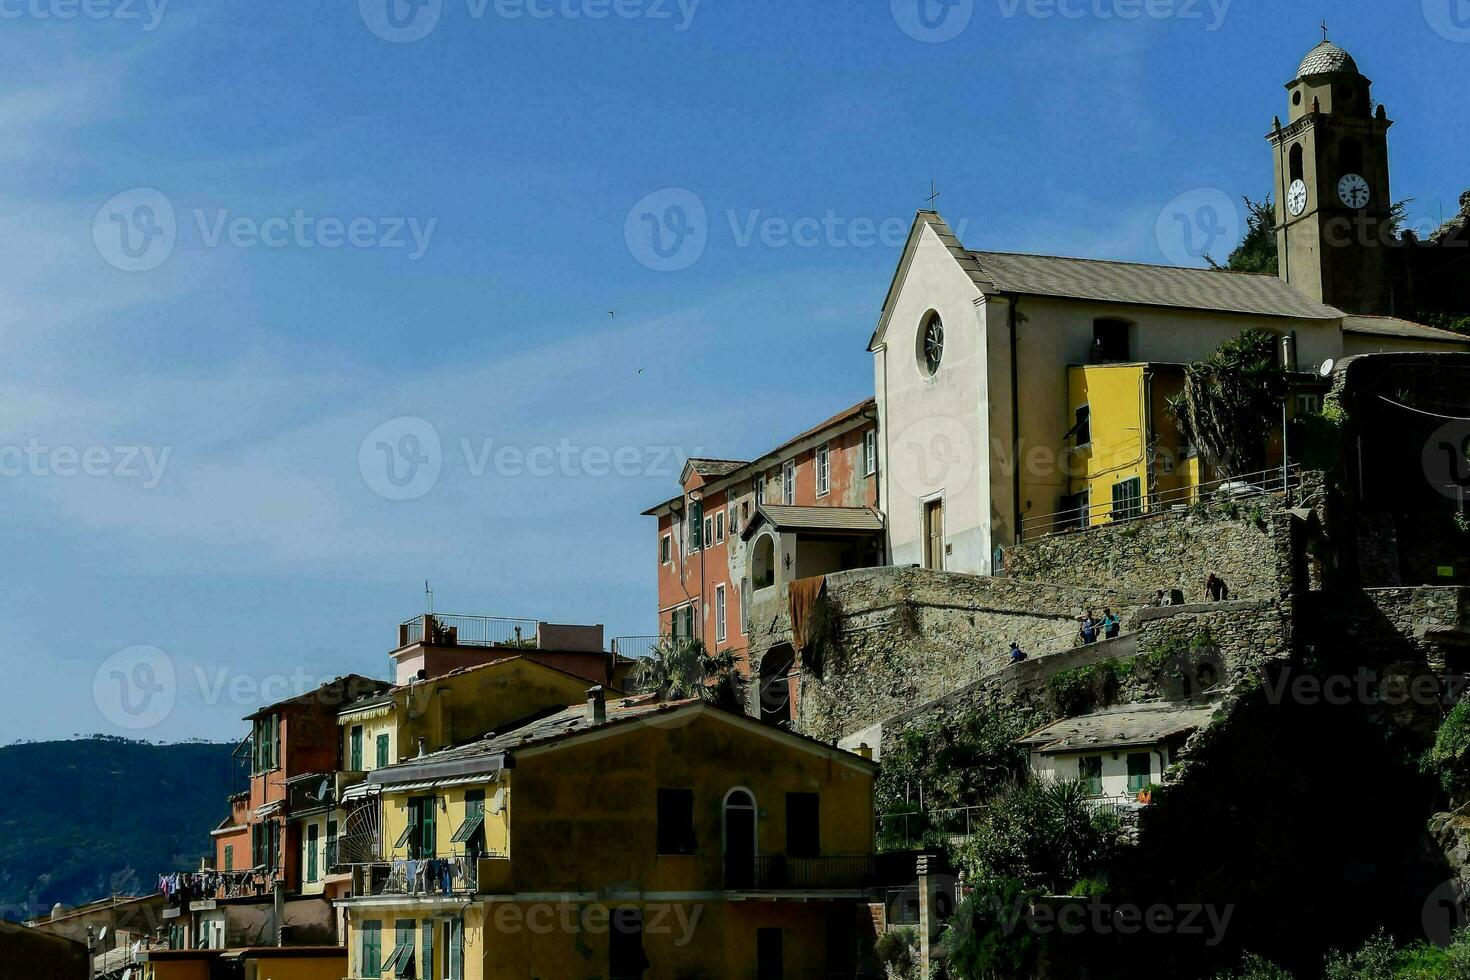 de stad av cinque terre, Italien foto